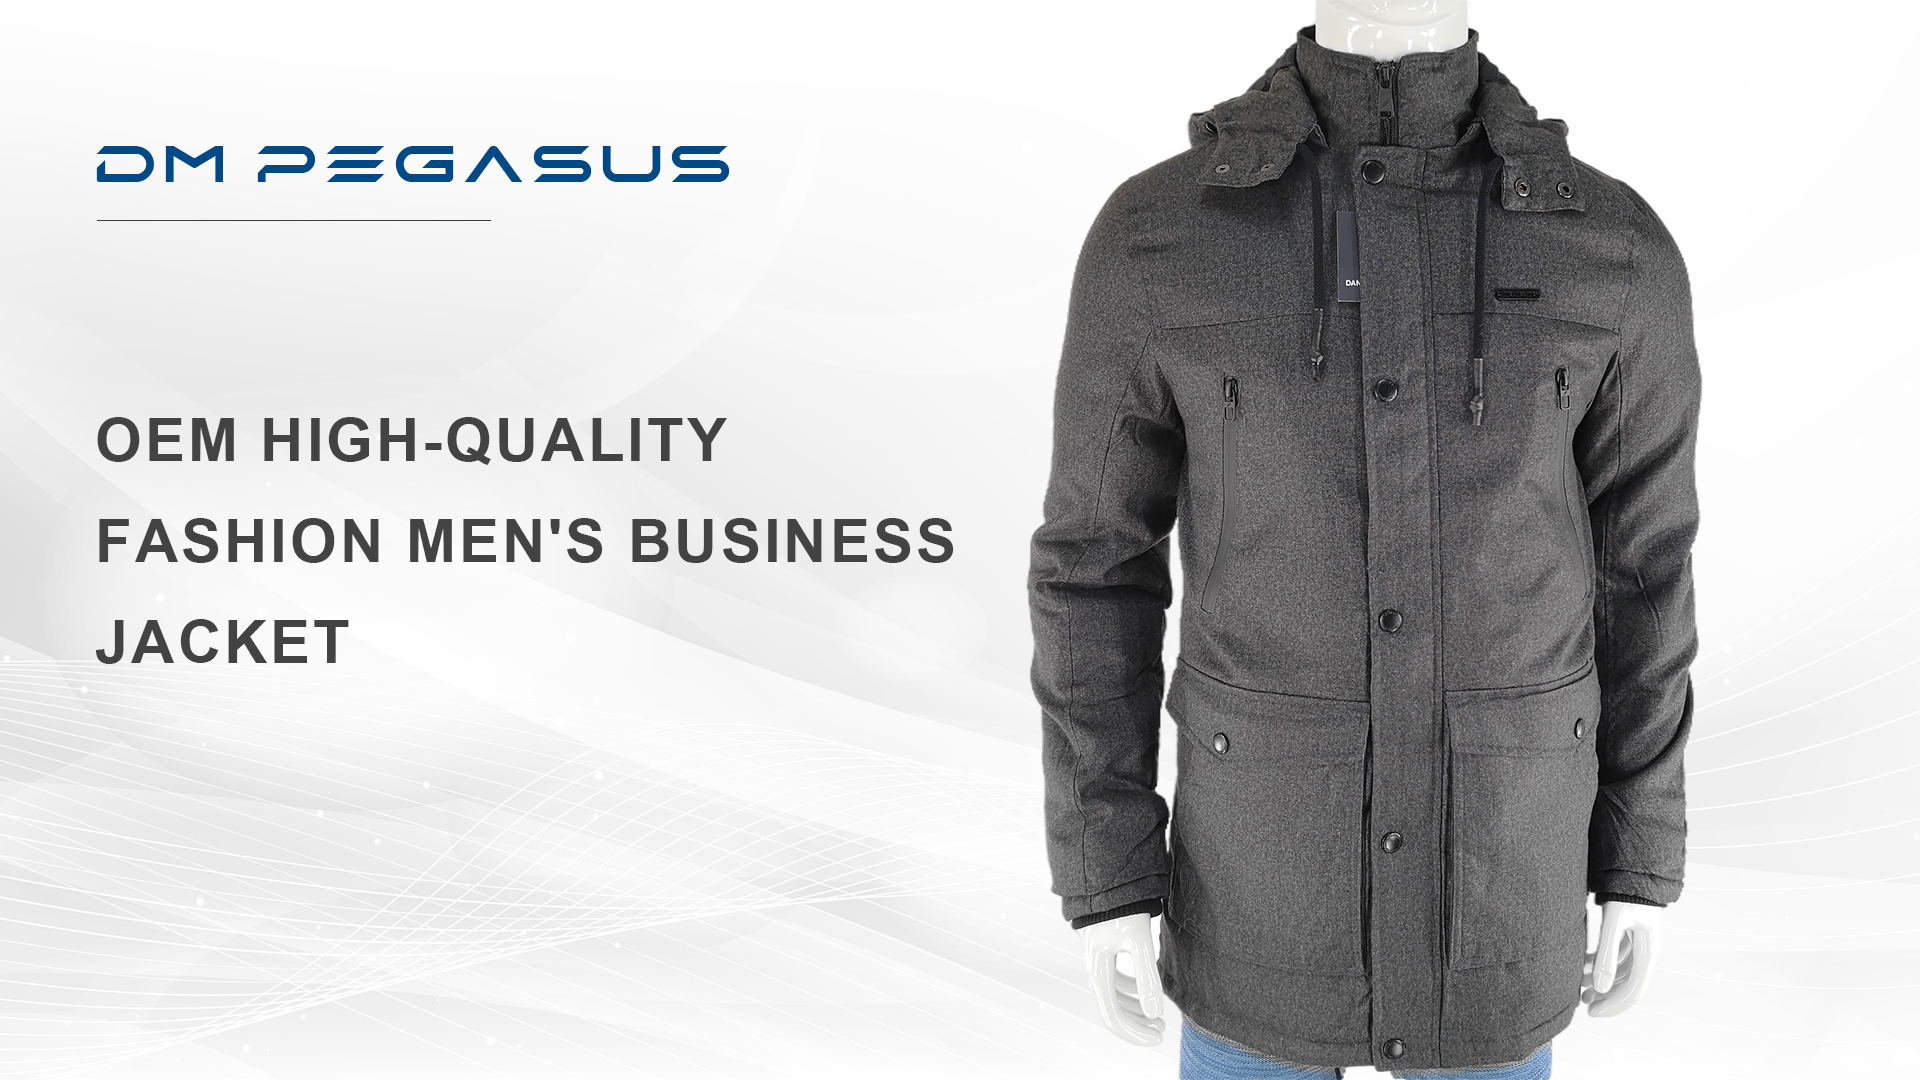 OEM High-Quality Fashion Business Jacket For Men